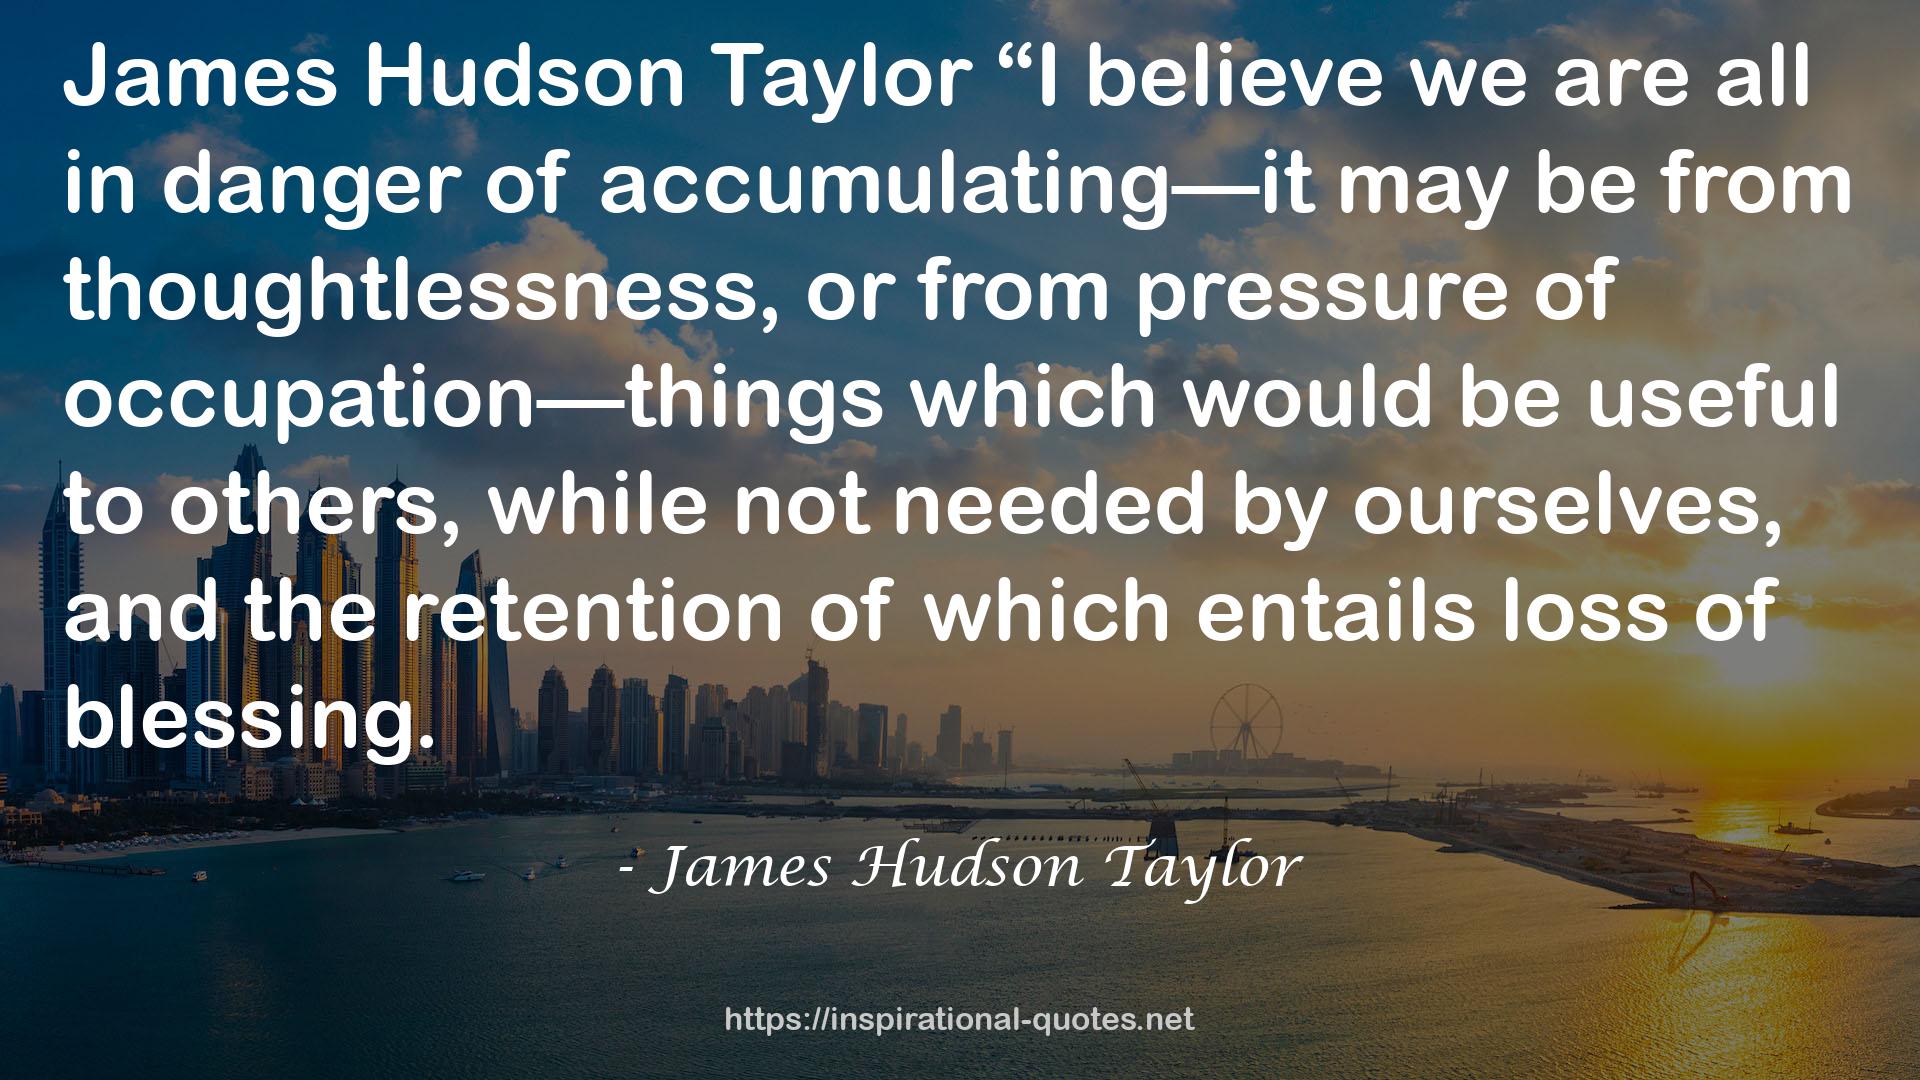 James Hudson Taylor QUOTES